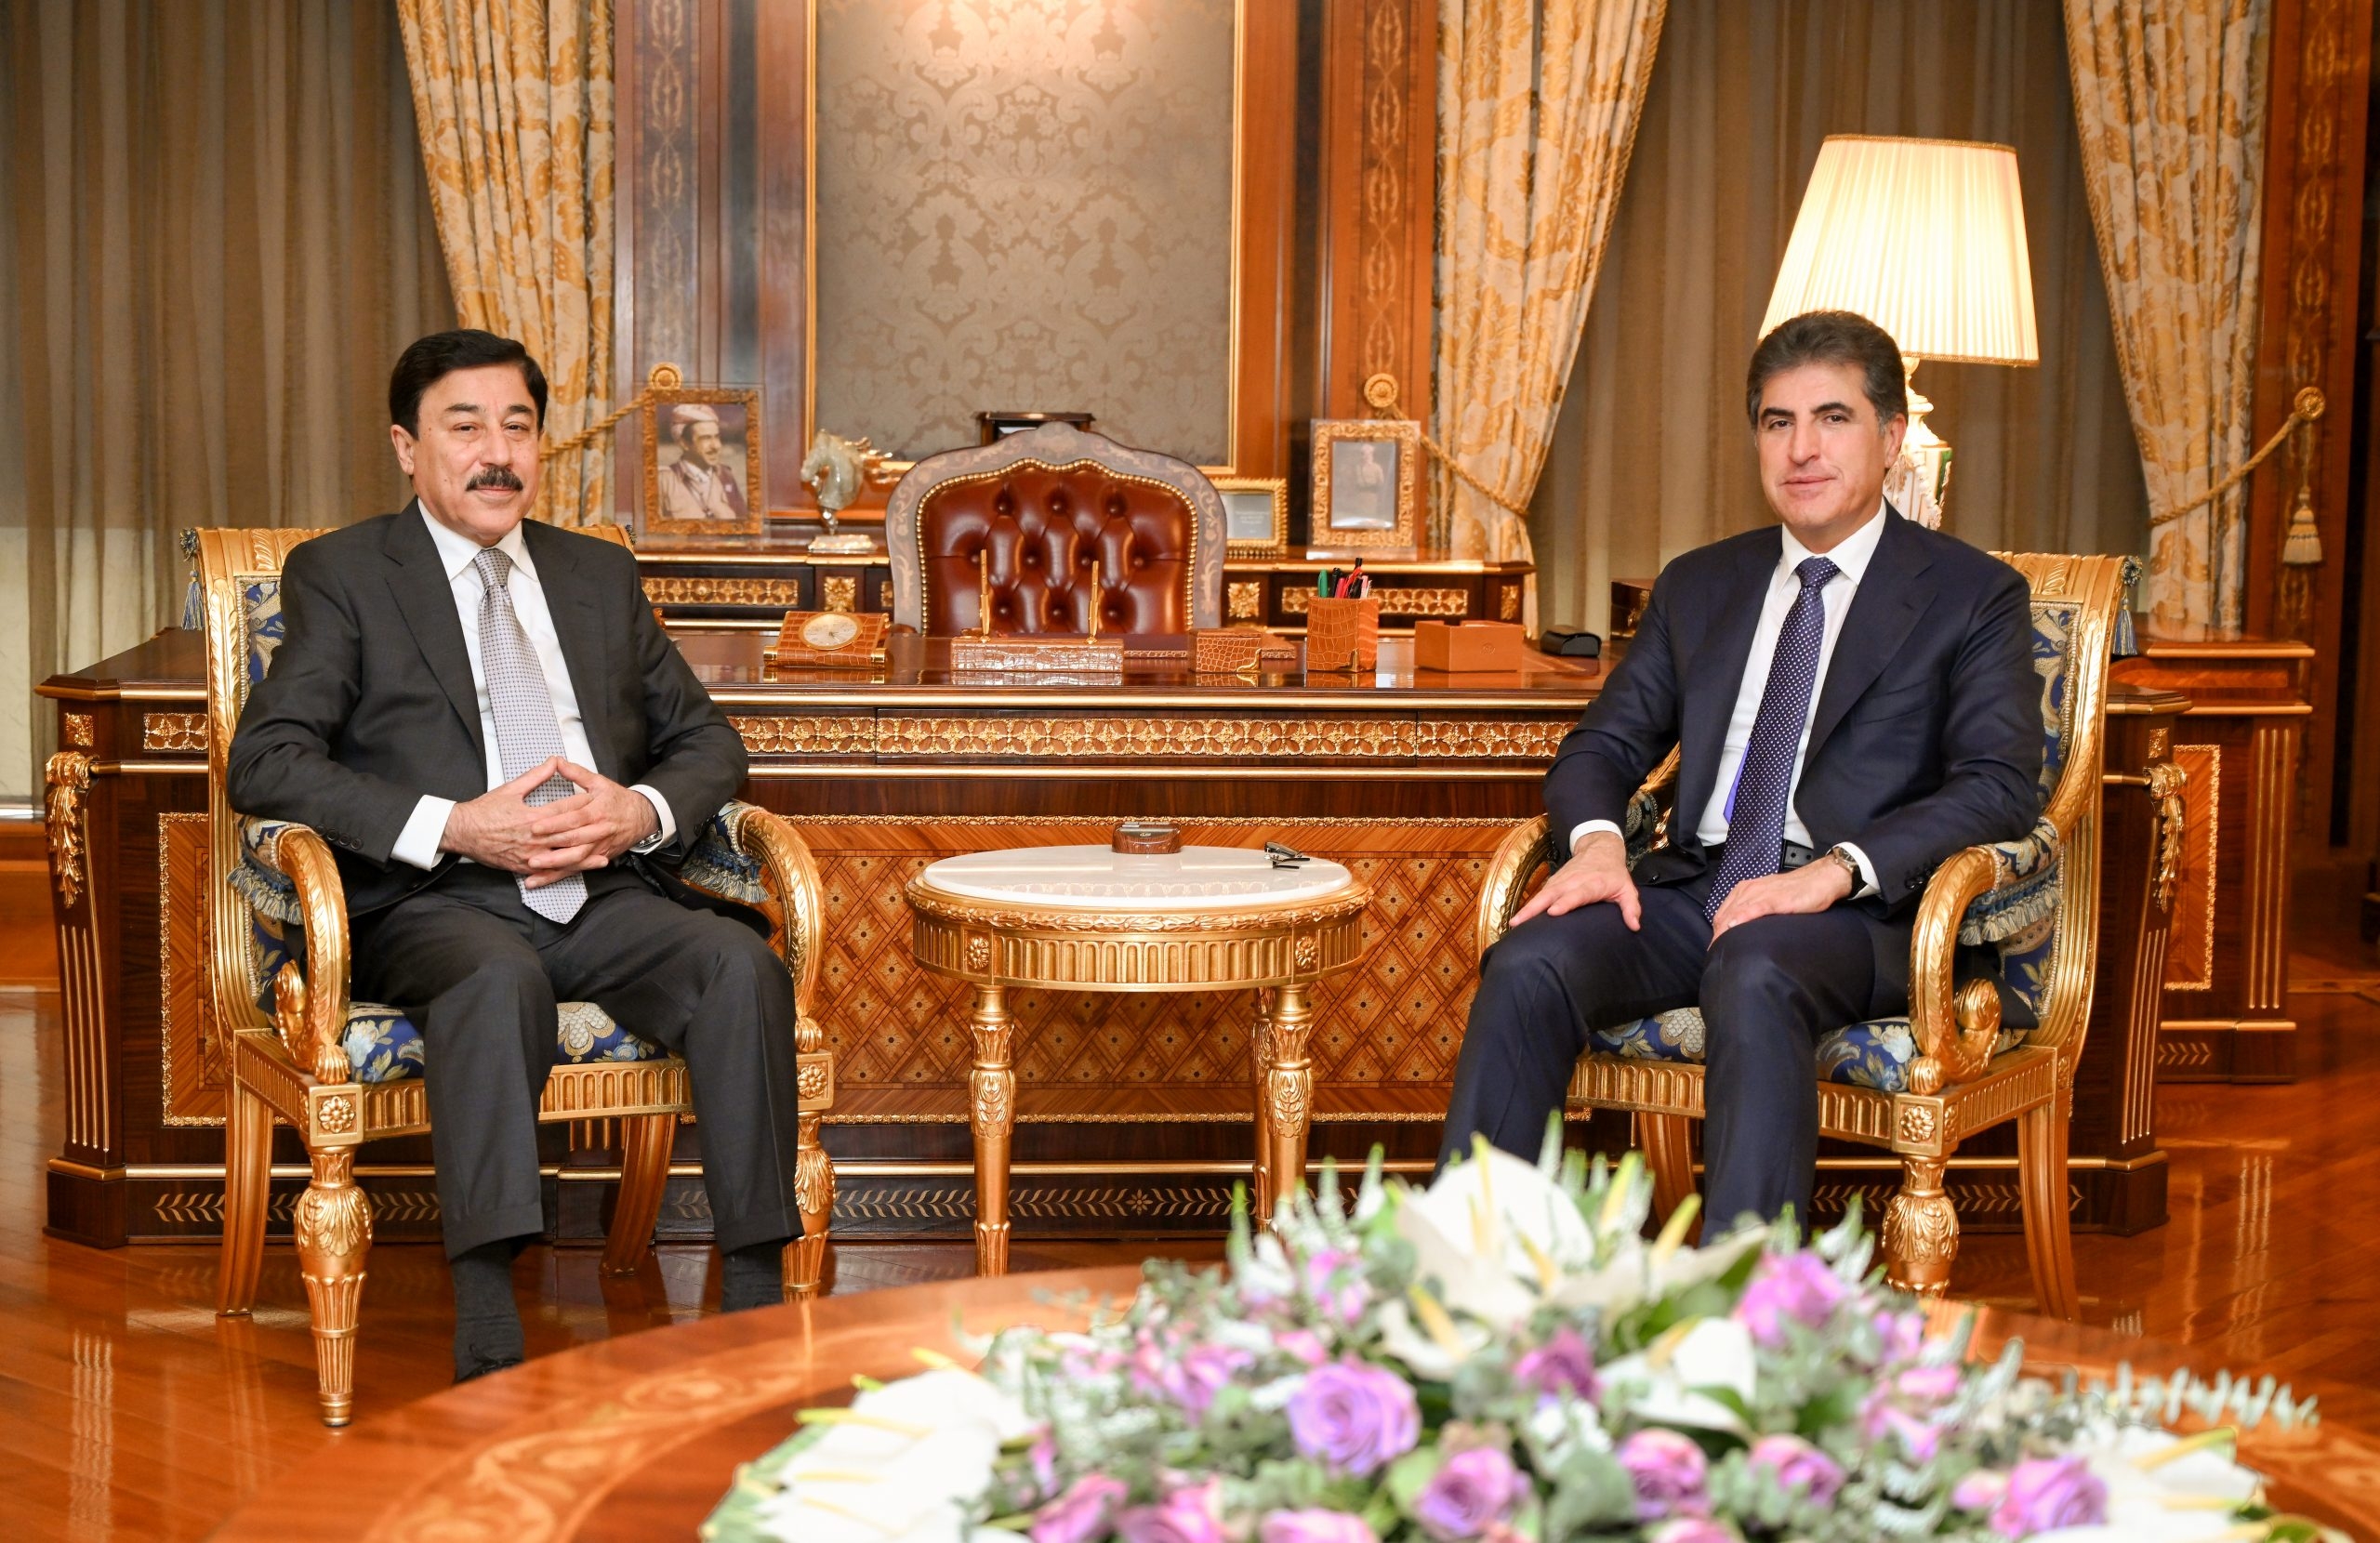 President Nechirvan Barzani meets with Governor of Central Bank of Iraq, Mr. Ali Mohsen al-Alaq